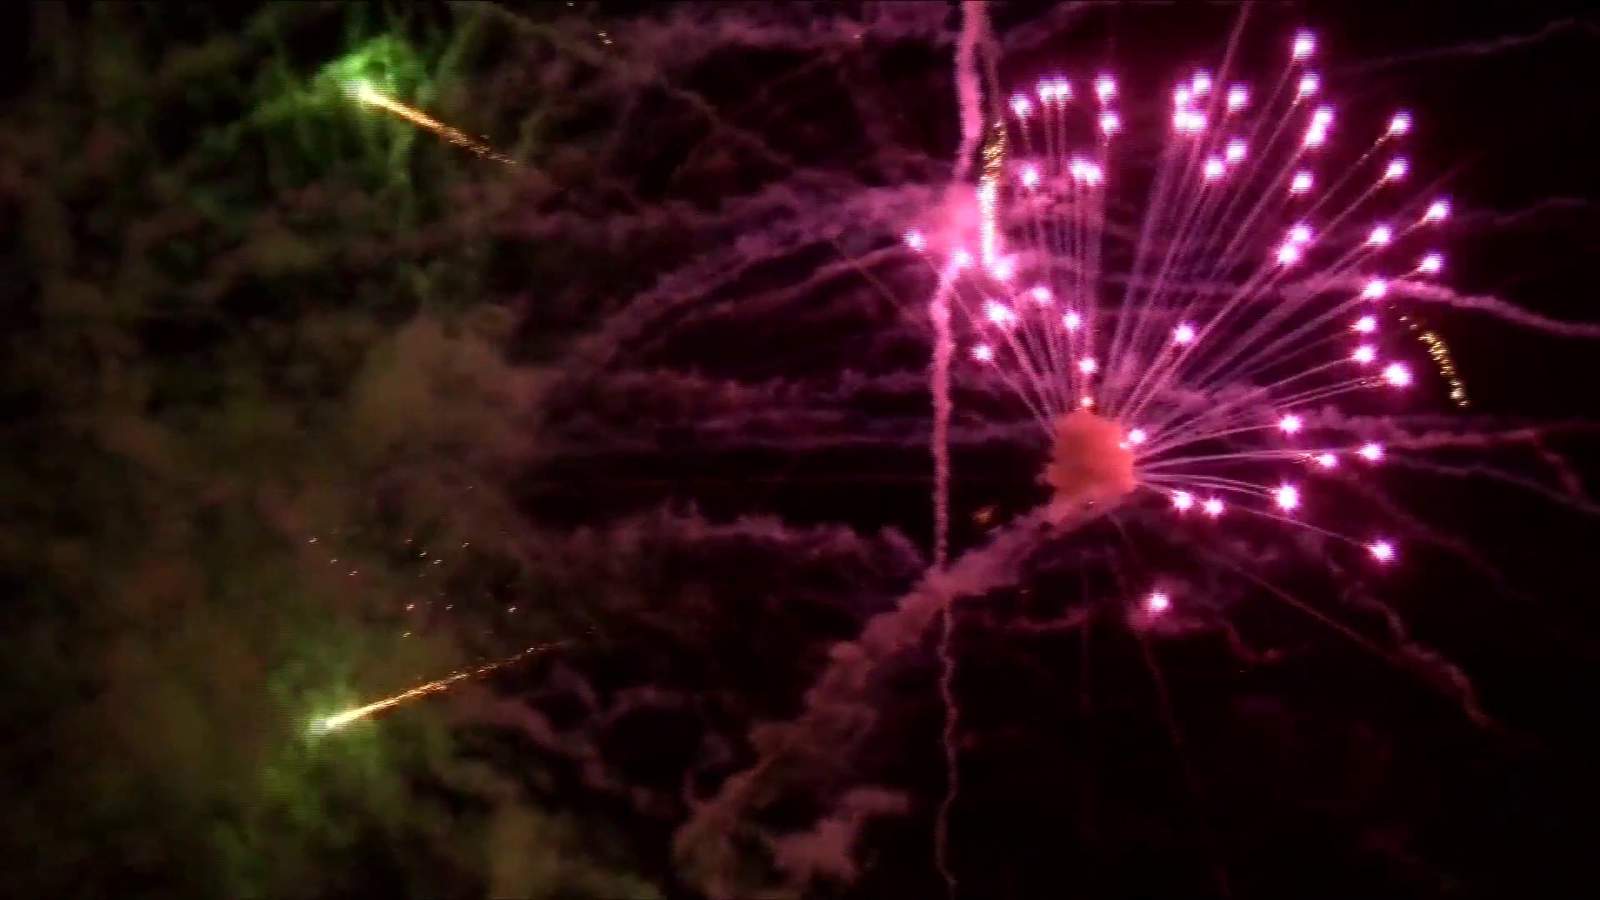 Roanoke sees an increase in firework complaints